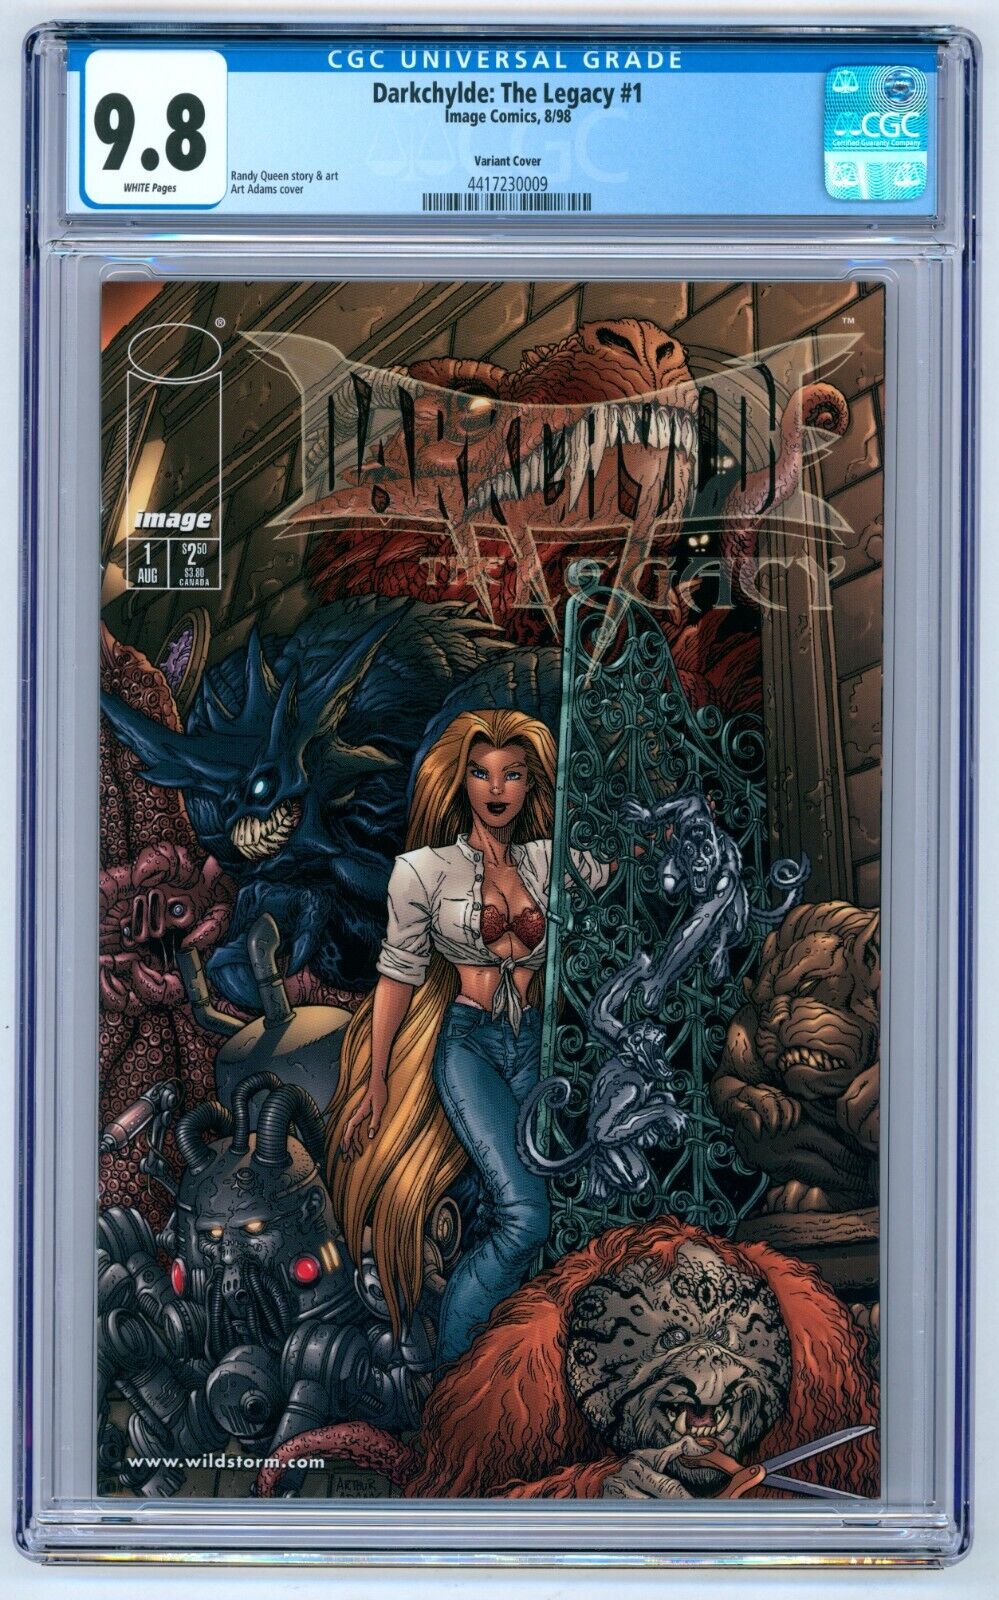 Darkchylde: The Legacy #1 CGC 9.8 (1998) - Variant Cover